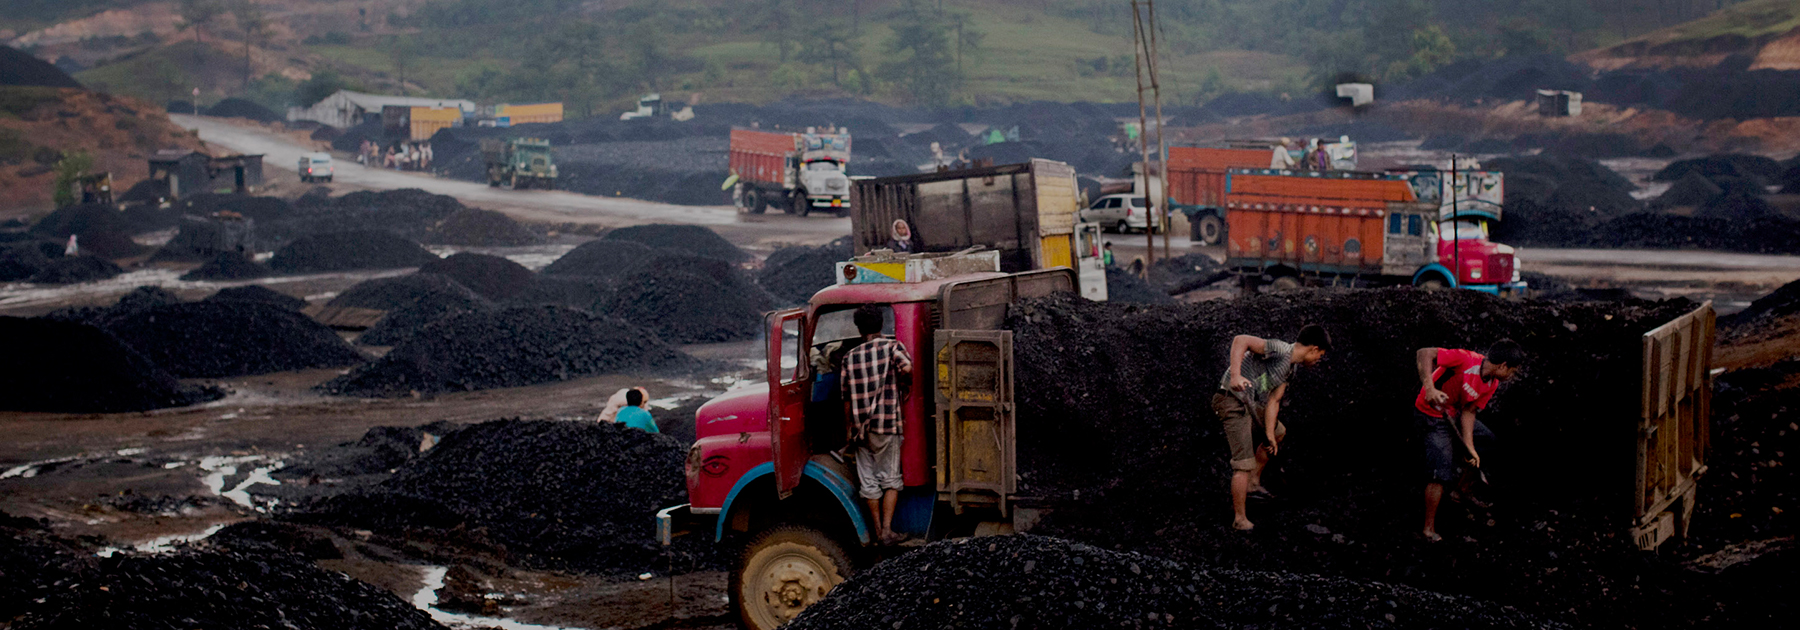 Workers load coal onto trucks at a coal depot near Lad Rymbai. (Daniel Berehulak/Getty Images)